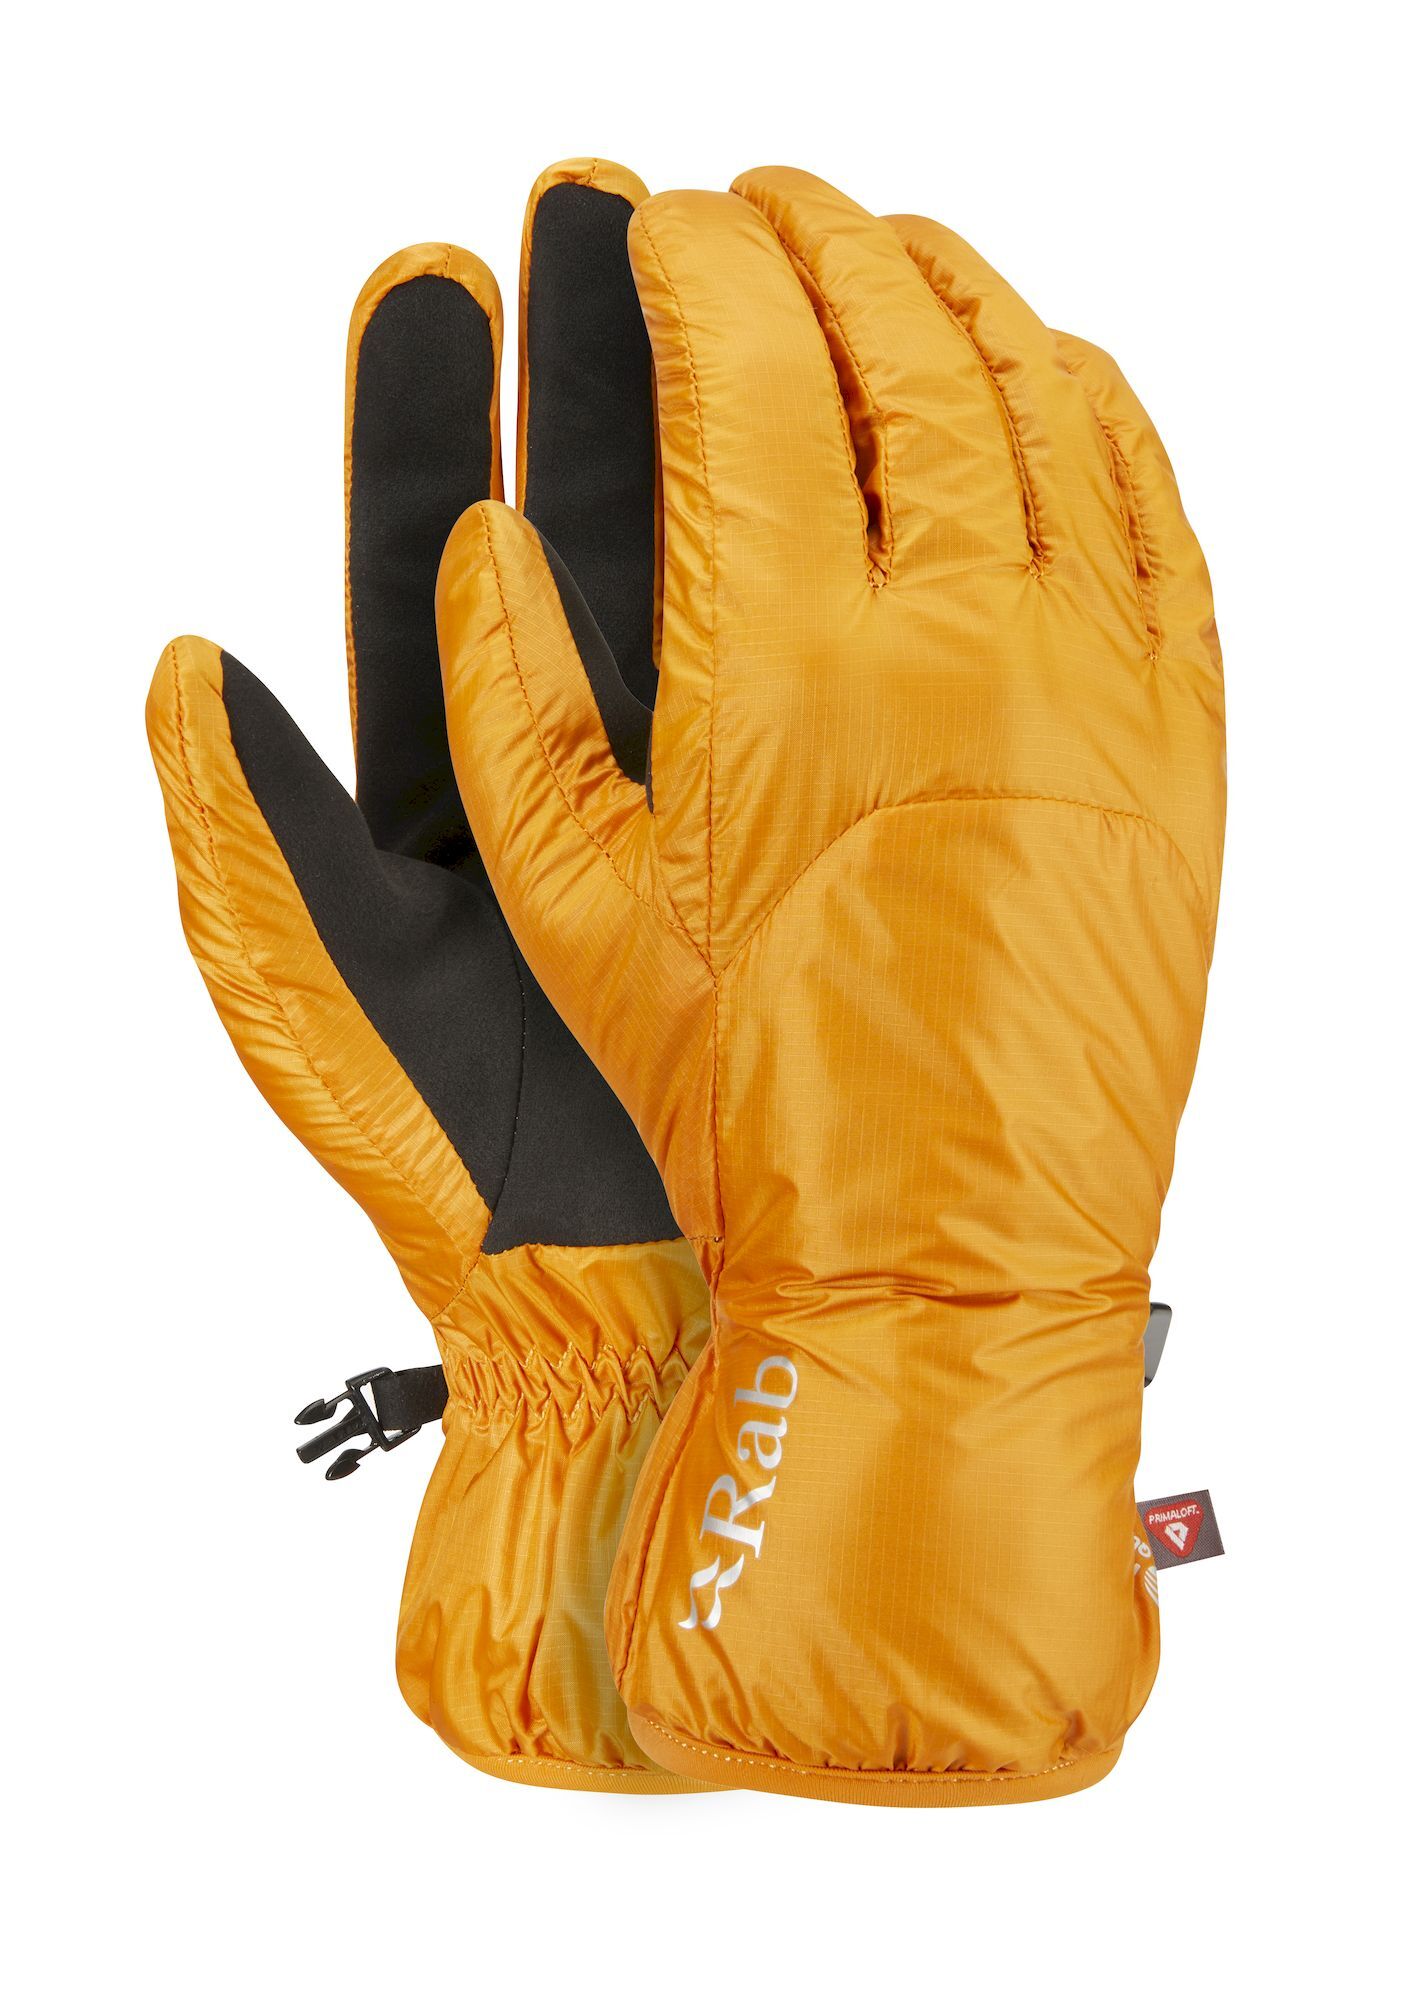 Rab Xenon Glove - Skihandschuhe - Herren